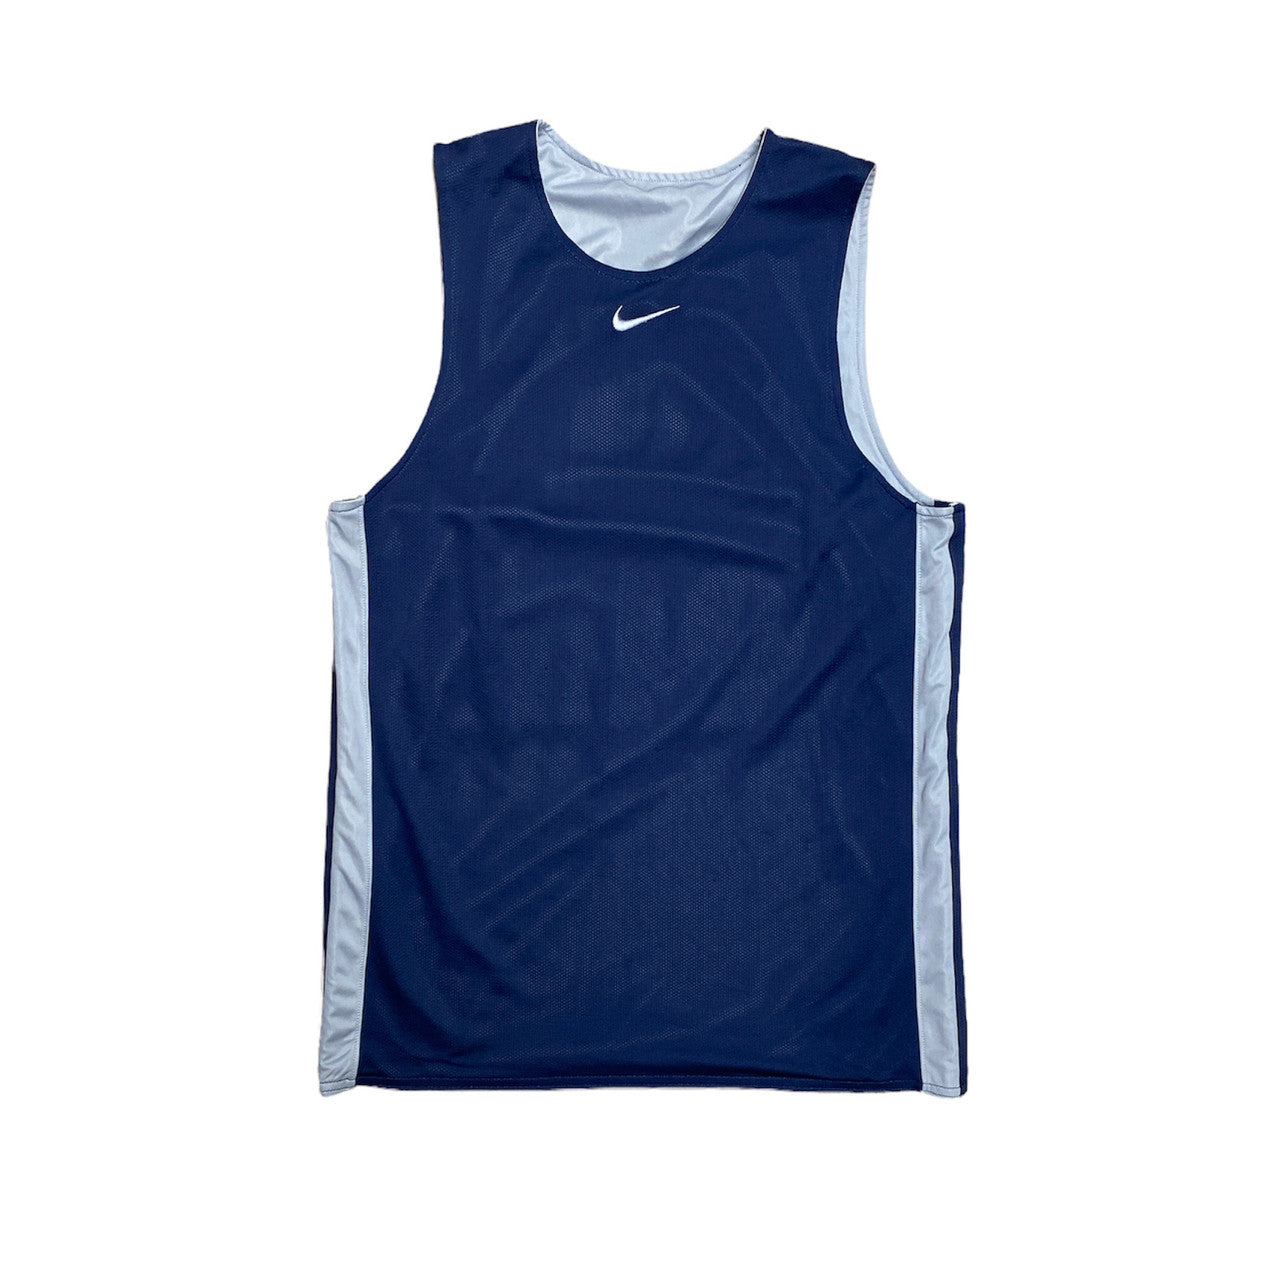 Nike Blue Reversible Basketball Jersey